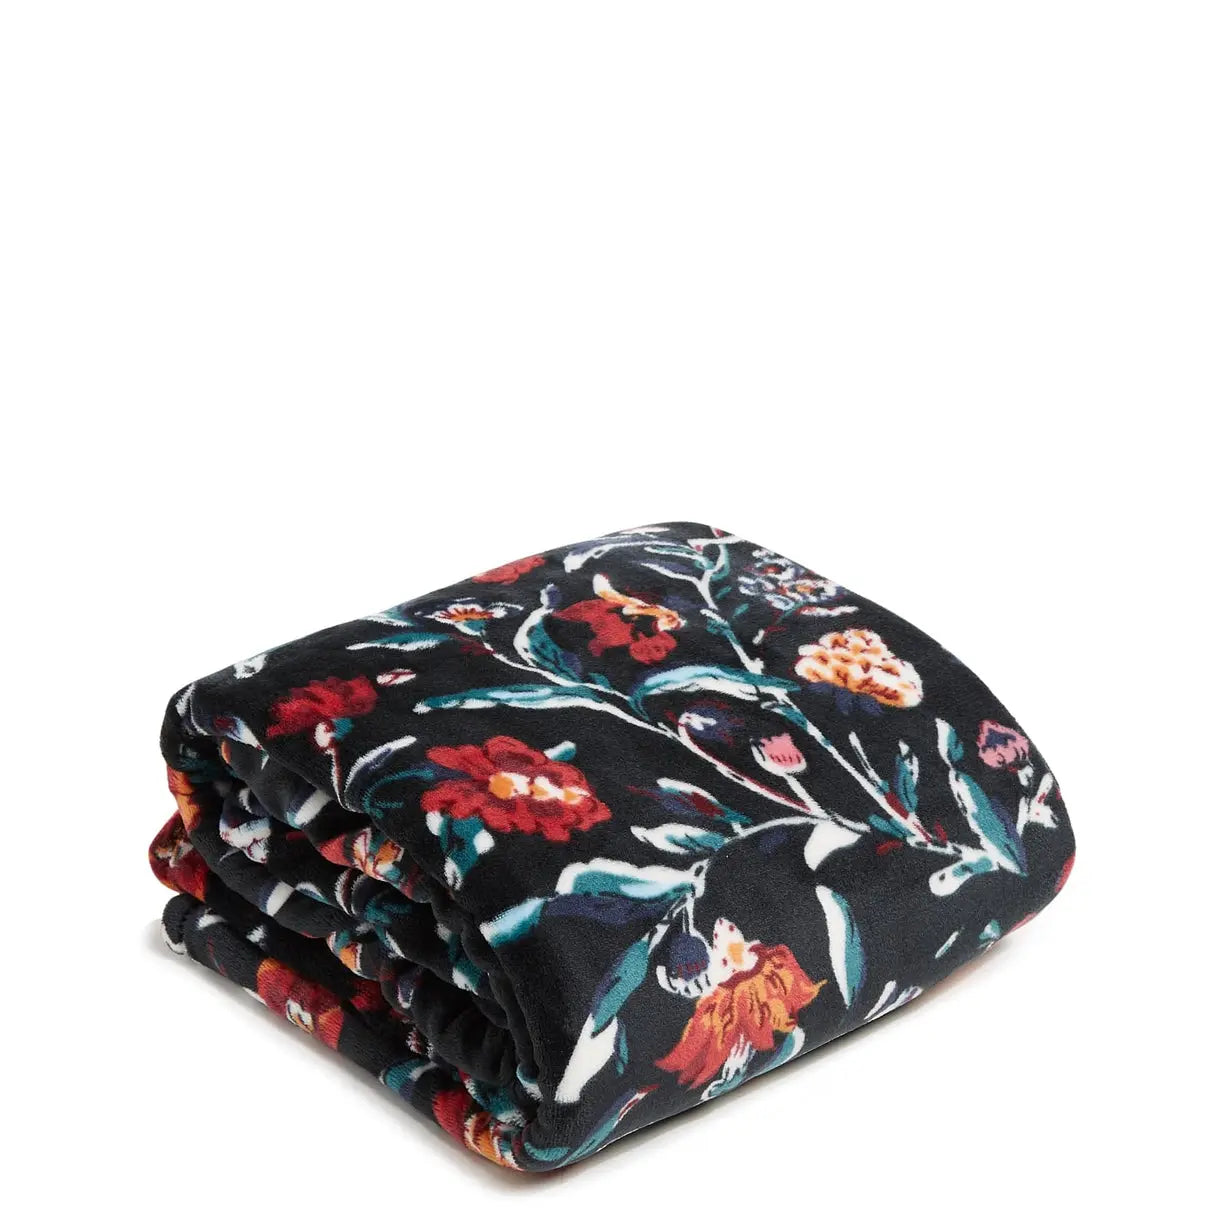 Vera Bradley Plush Throw Blanket - Perennials Noir